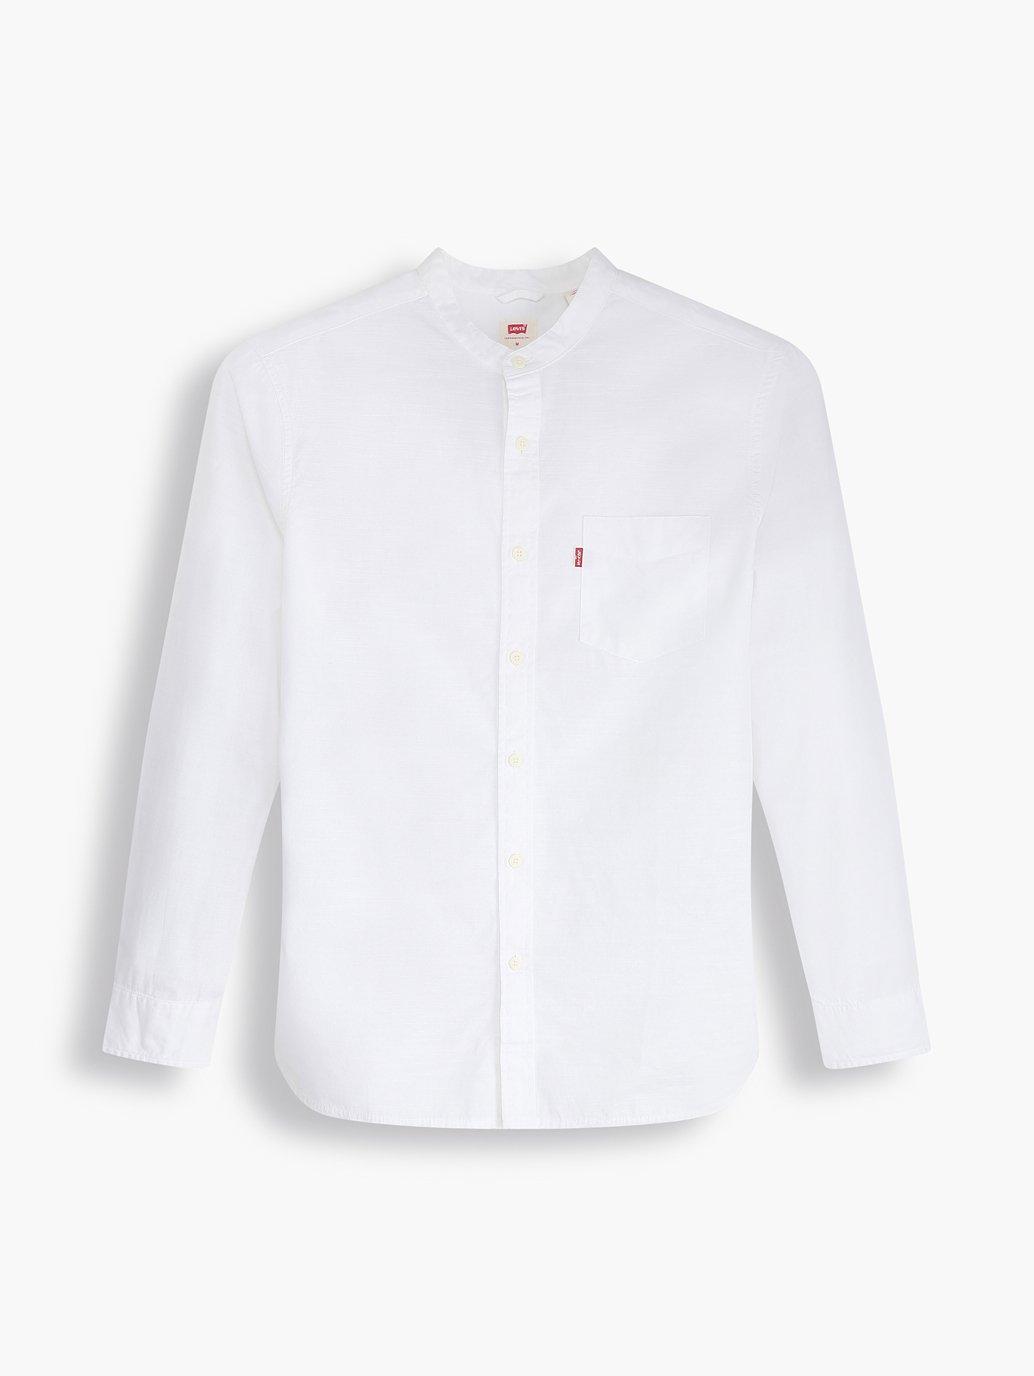 Buy Levi's® Men's Banded Collar 1 Pocket Shirt | Levi’s® Official ...